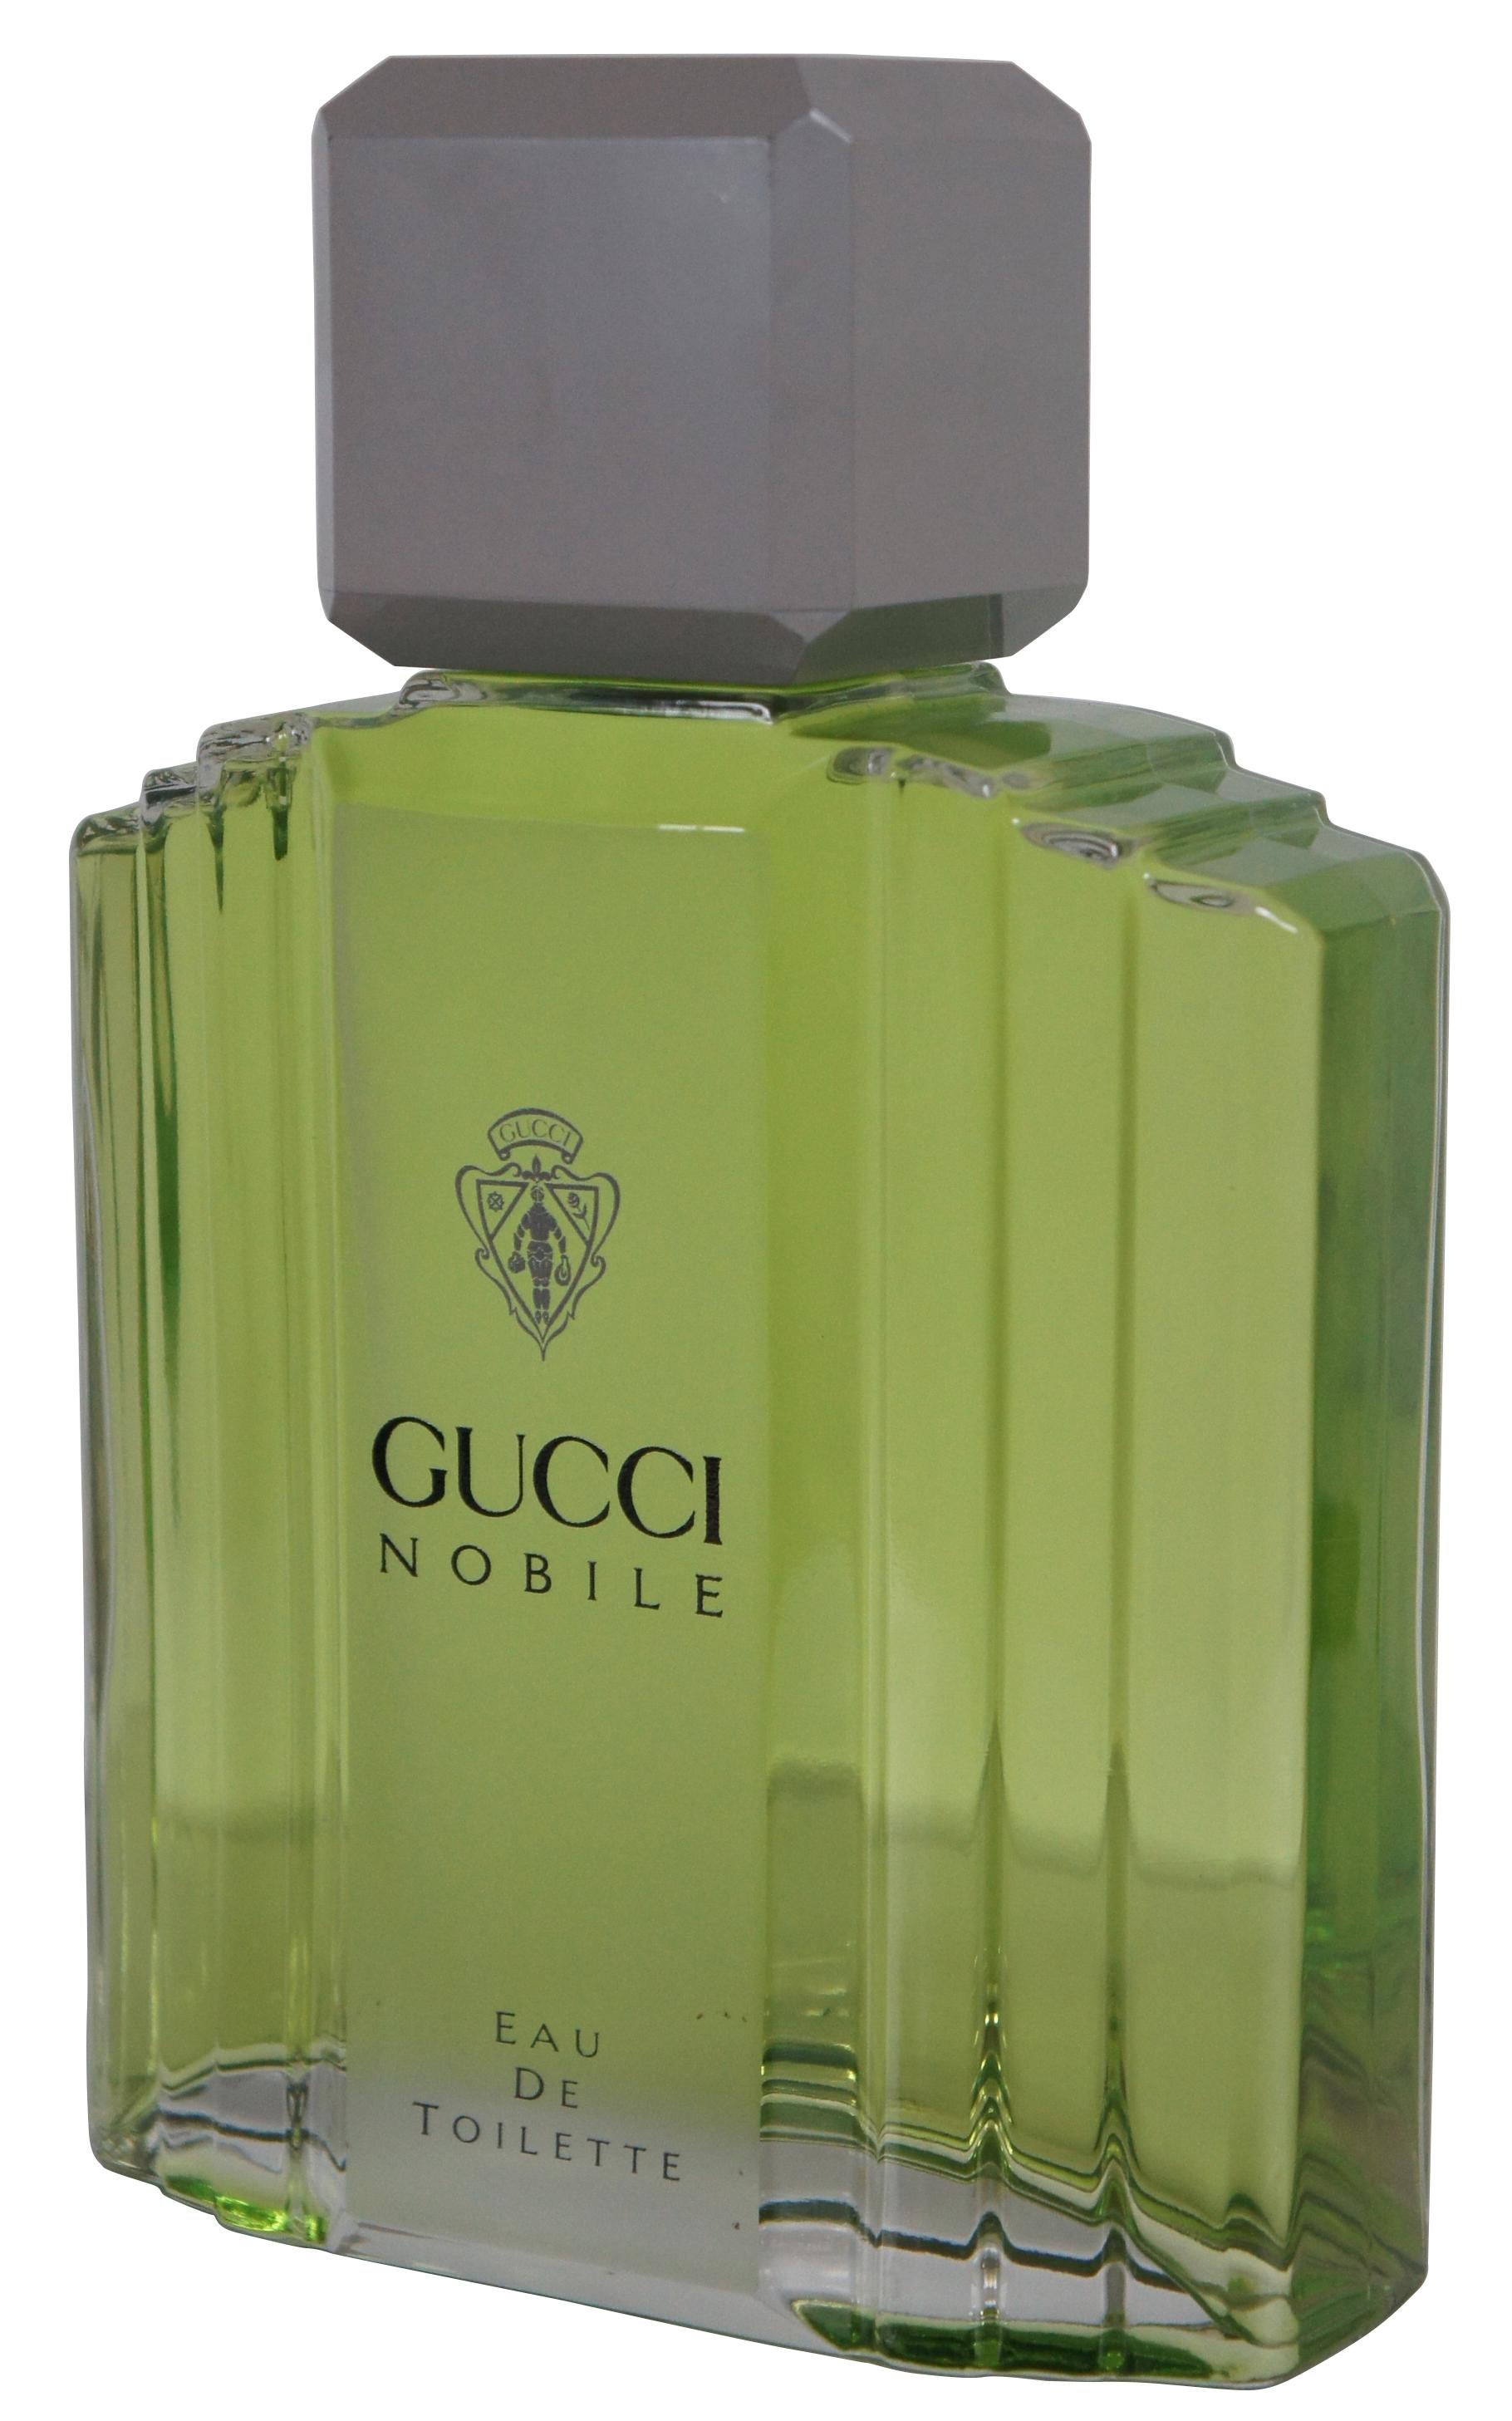 Vintage Gucci Nobile eu de toilette designer fragrance factice or dummy bottle with elegant art deco styling, originally part of a department store display. Mesure : 11